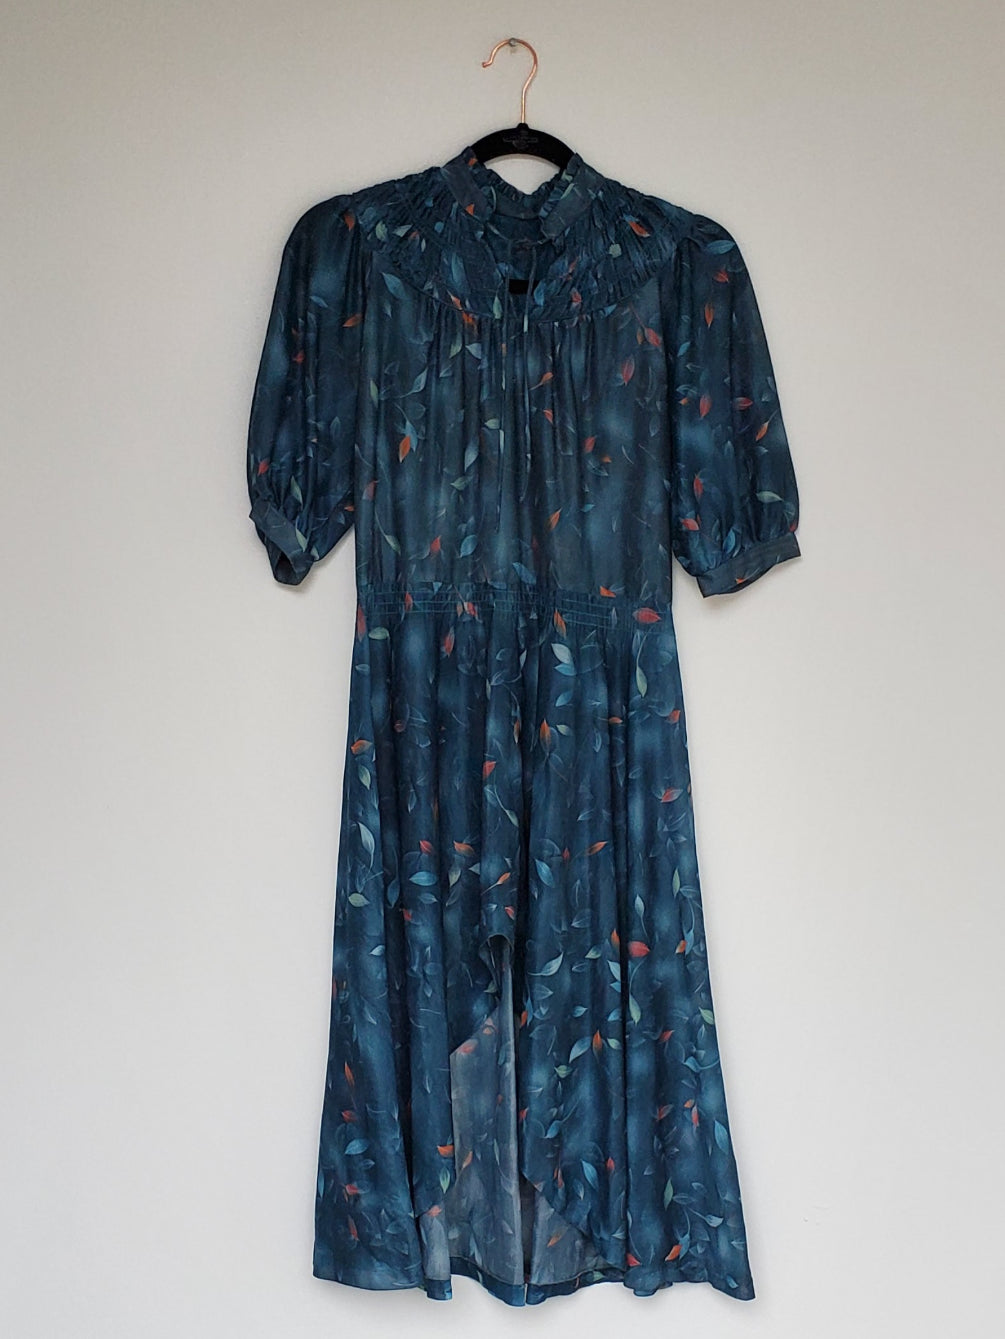 Vintage Dark Turquoise Floral Sheer Dress with Full Sleeves